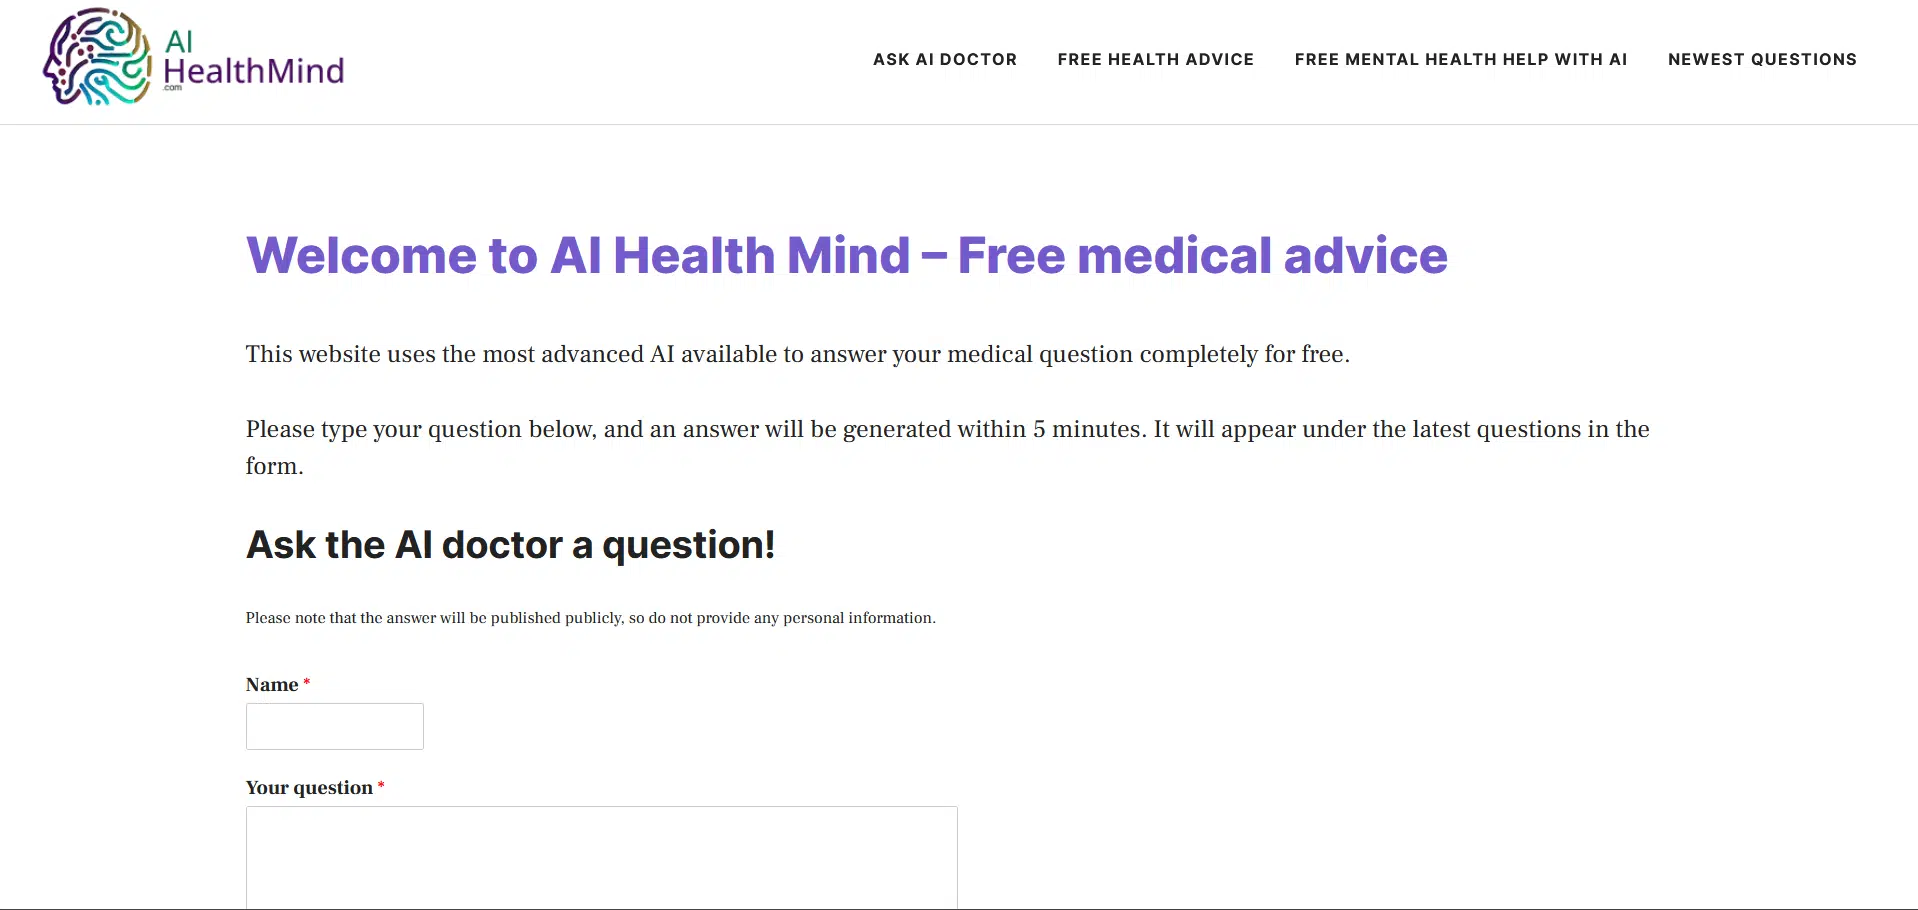 AI Health Mindwebsite picture